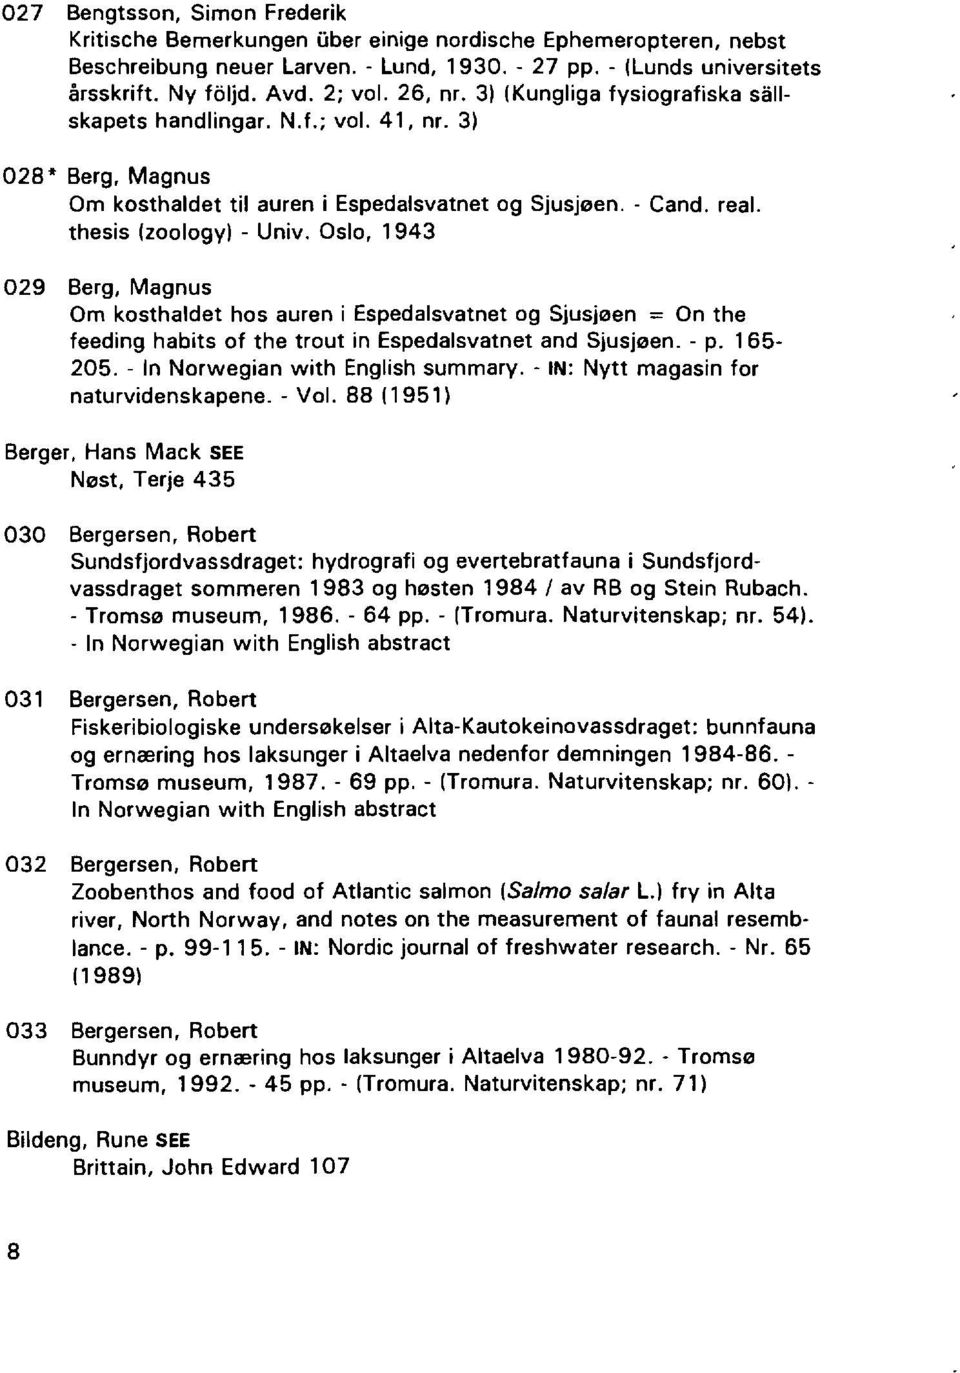 Oslo, 1943 029 Berg, Magnus Om kosthaldet hos auren i Espedalsvatnet og Sjusj0en = On the feeding habits of the trout in Espedalsvatnet and Sjusj0en. - p. 165 205. - In Norwegian with English summary.